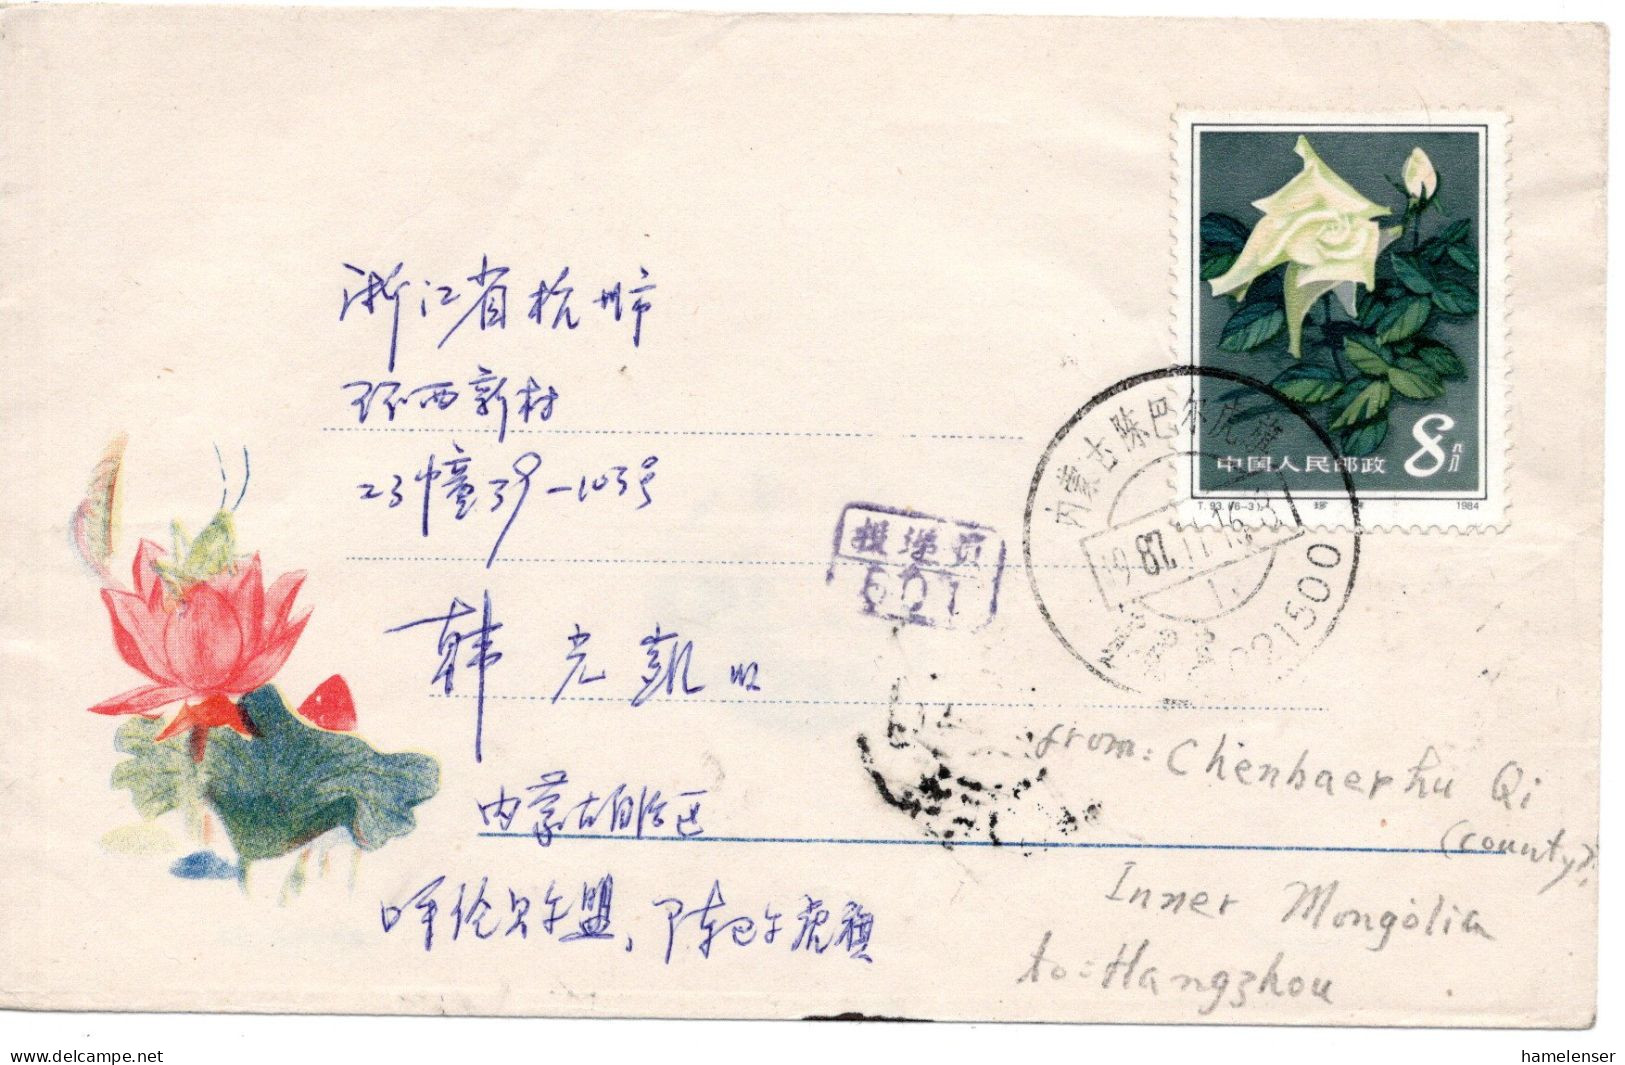 67600 - VR China - 1987 - 8f Rosen EF A Bf NEIMENGGU CHENHAERHU QI -> HANGZHOU - Lettres & Documents